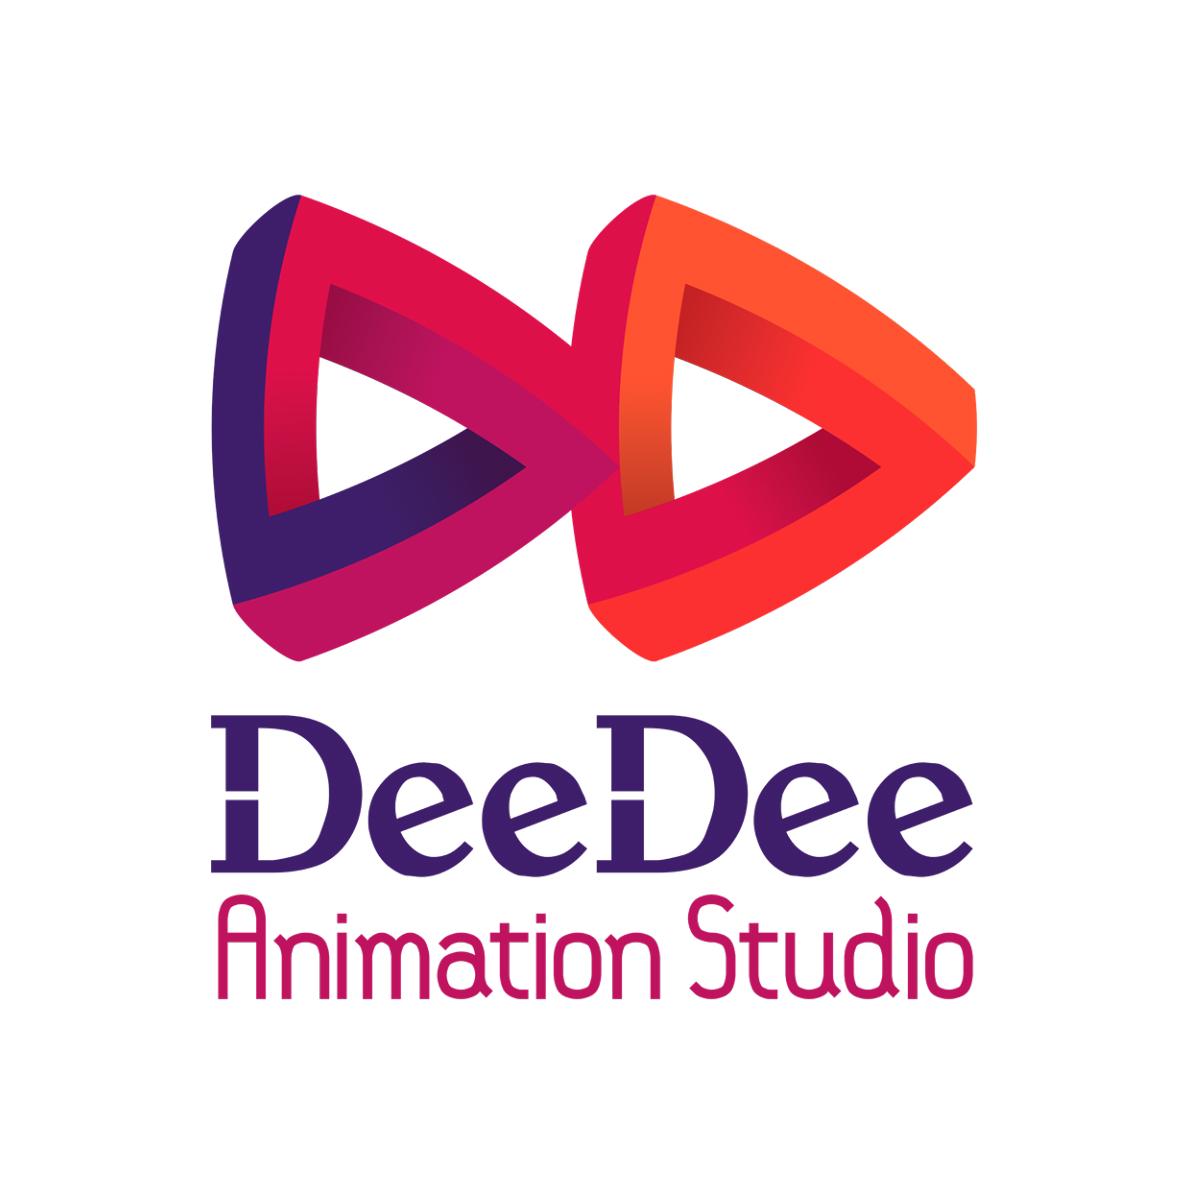 DeeDee Animation Studio profile on Qualified.One